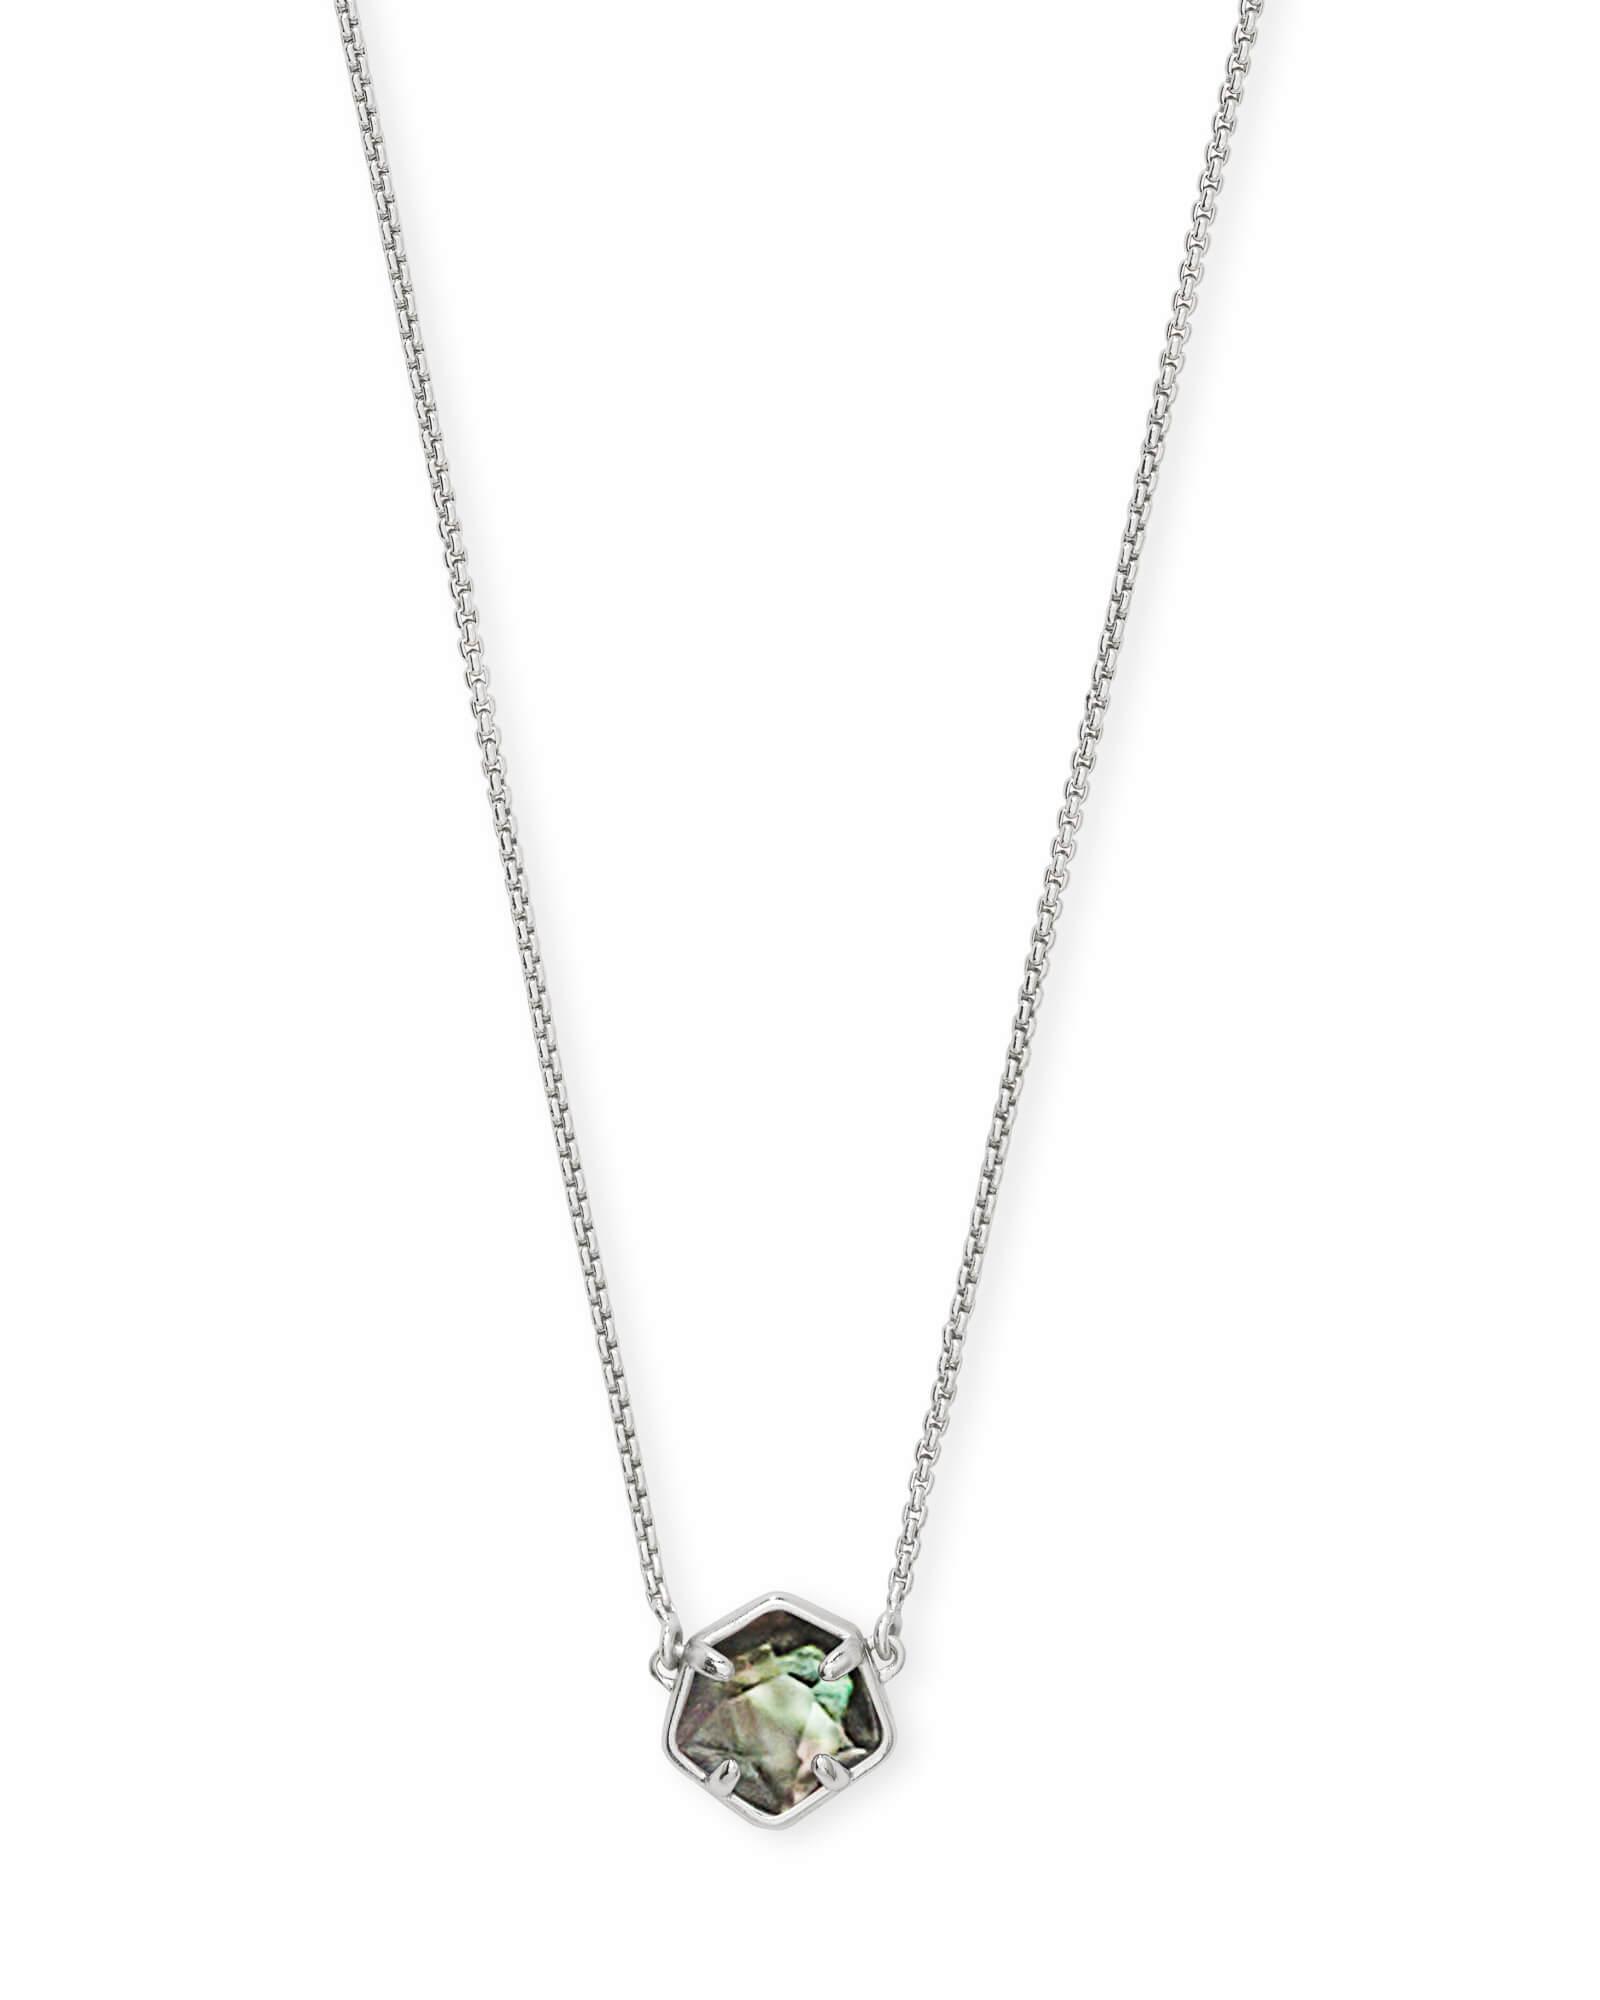 Kendra Scott Jaxon Bright Silver Pendant Necklace in Black Mother-of